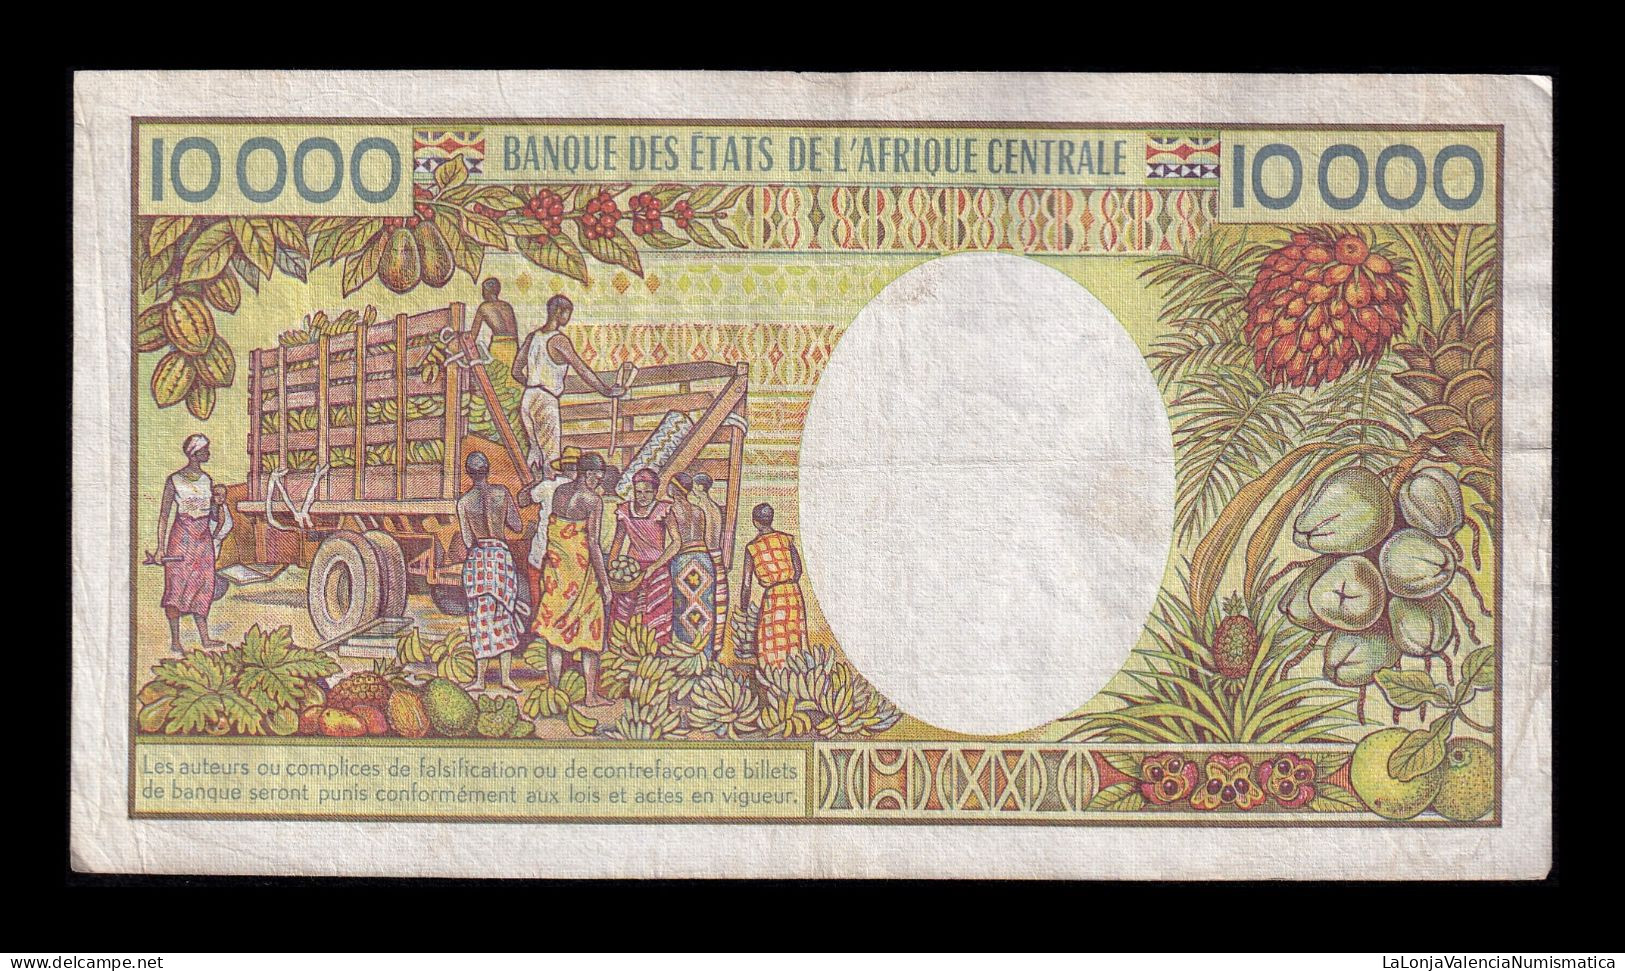 Camerún Cameroon 10000 Francos ND (1981) Pick 20 Bc/Mbc F/Vf - Cameroon